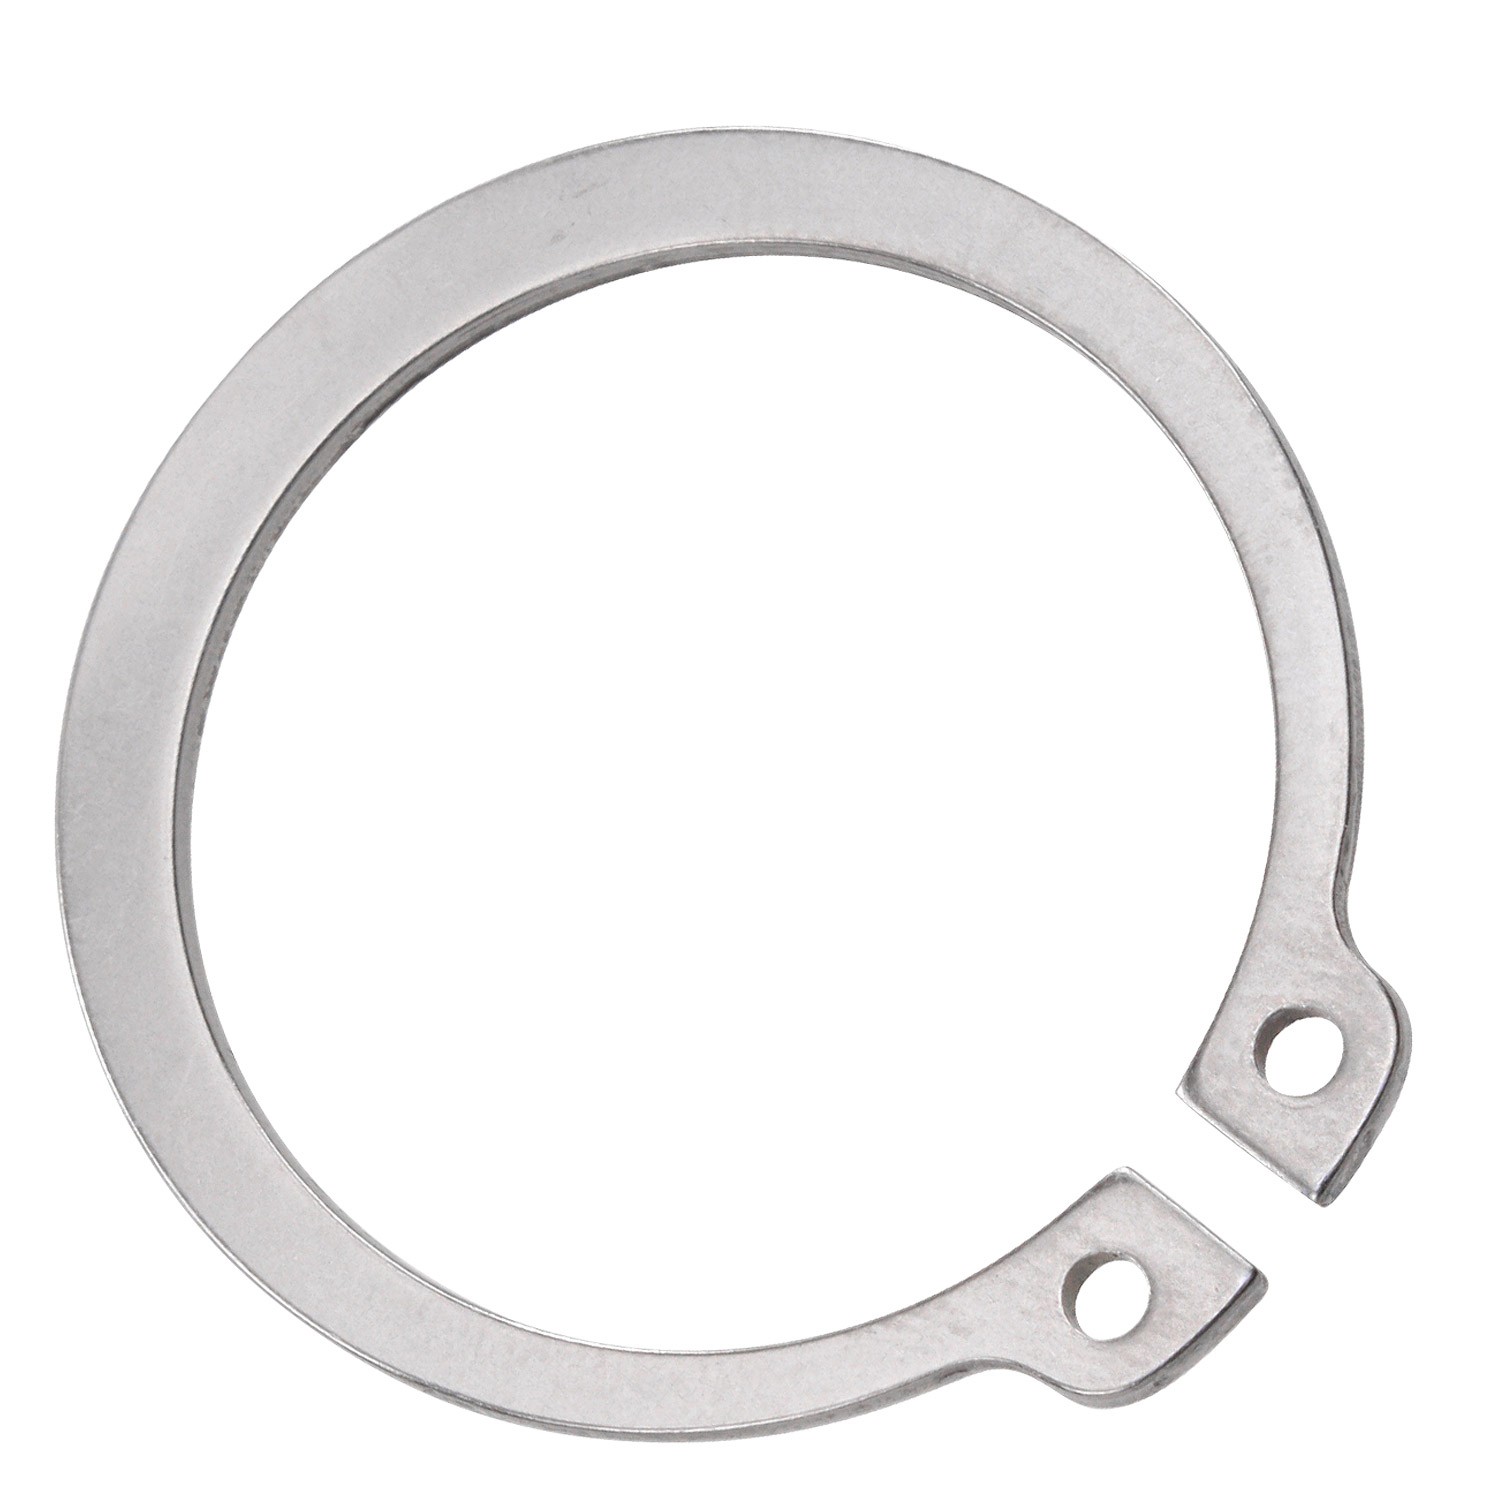 Кольцо стопорное наружное 24х1,2 DIN 471, нержавеющая сталь A4 - фото